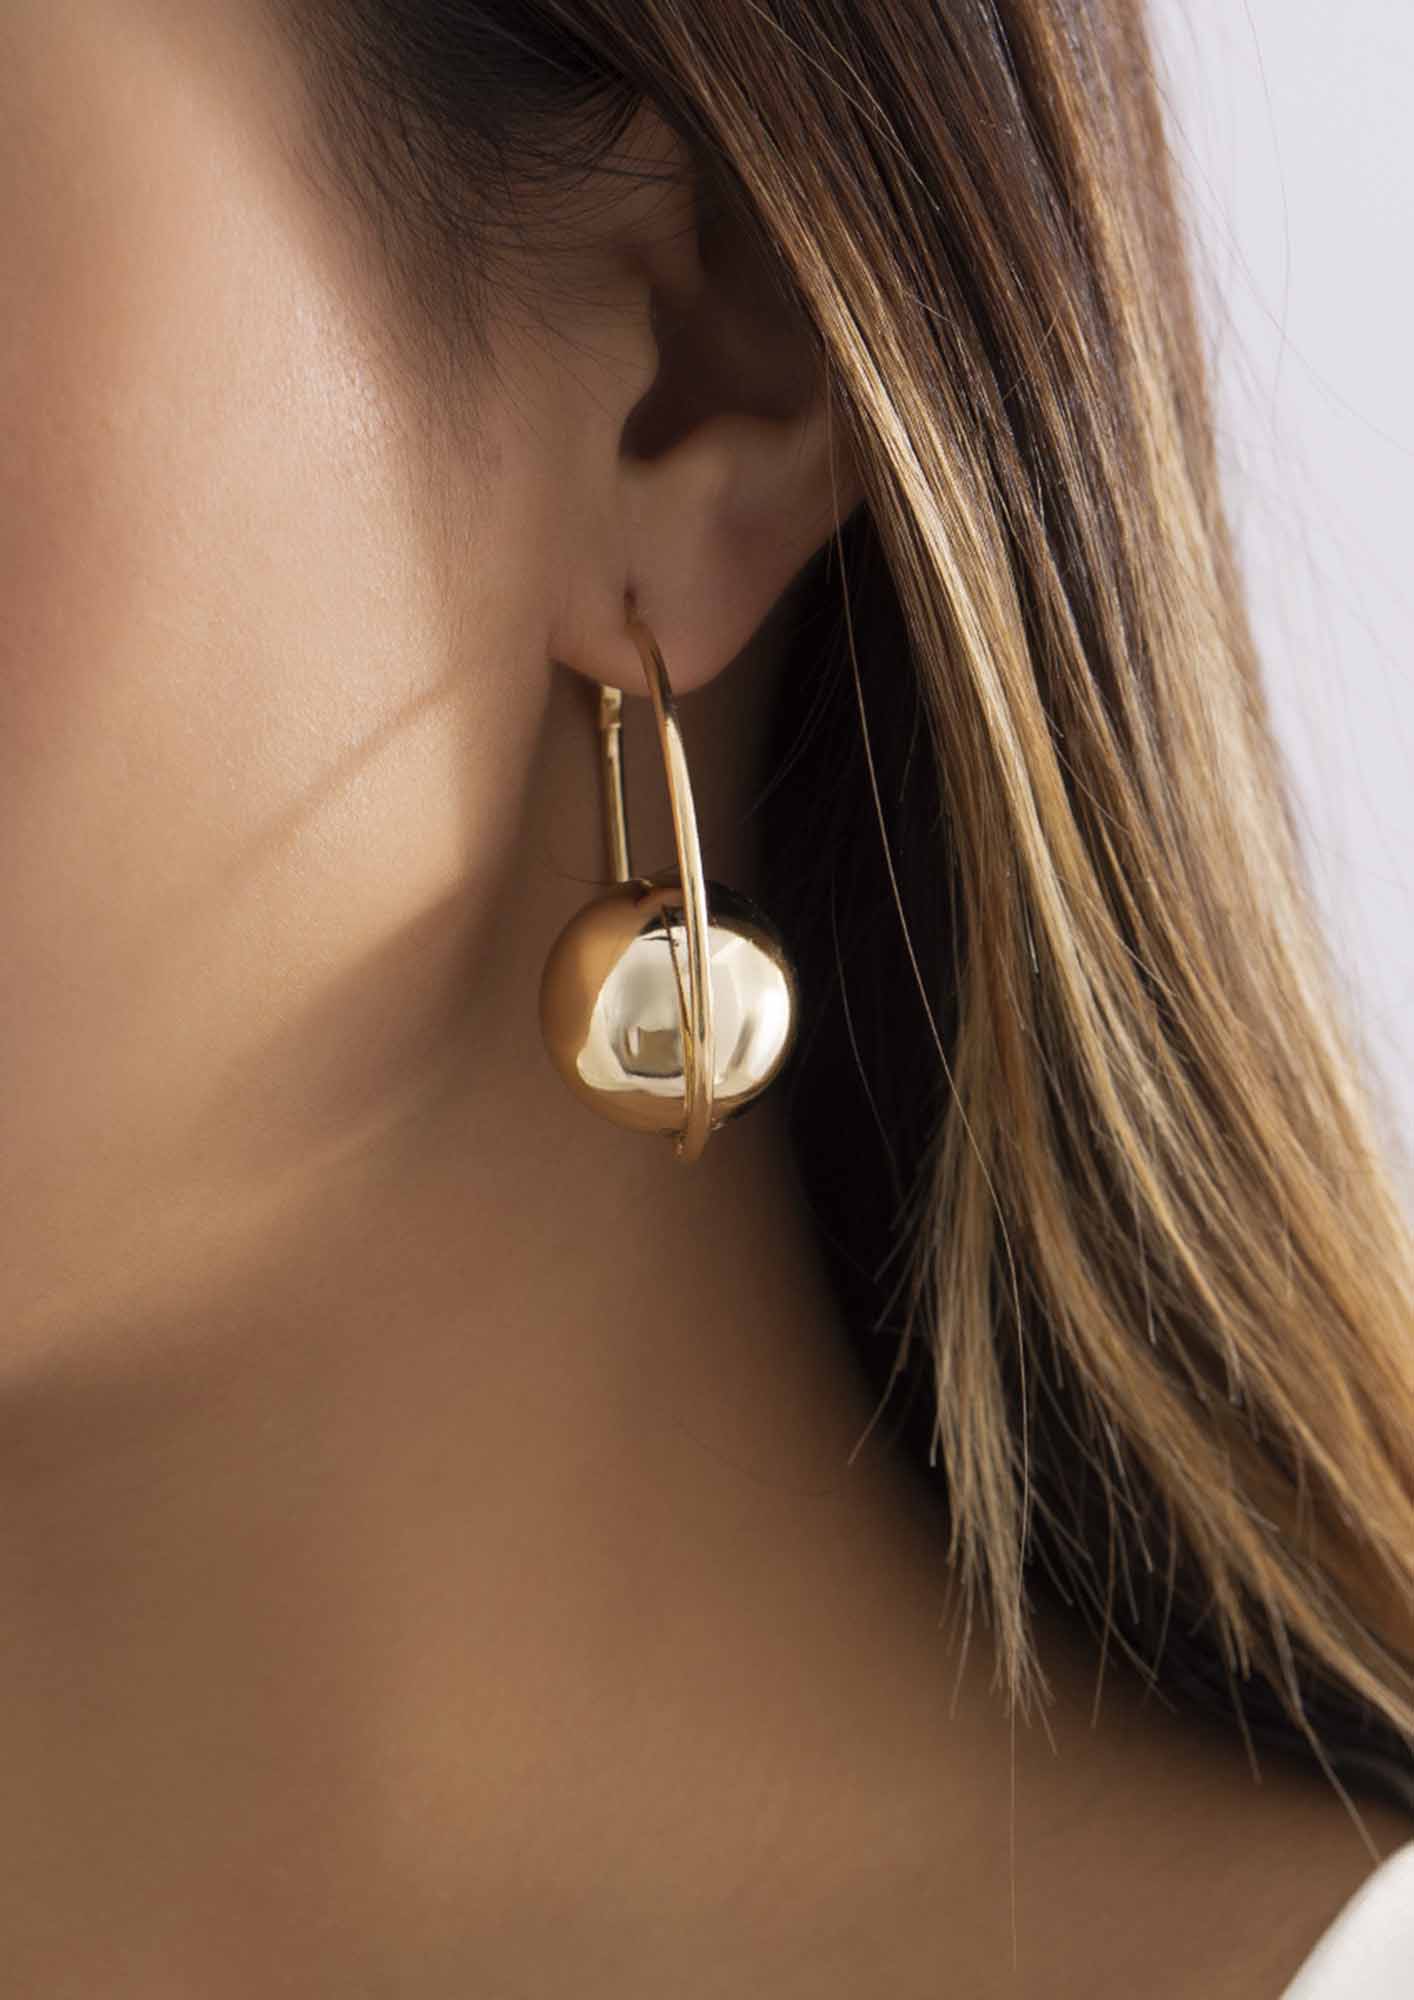 Ball gold - earrings gold earrings jewelry genuine murano glass of venice